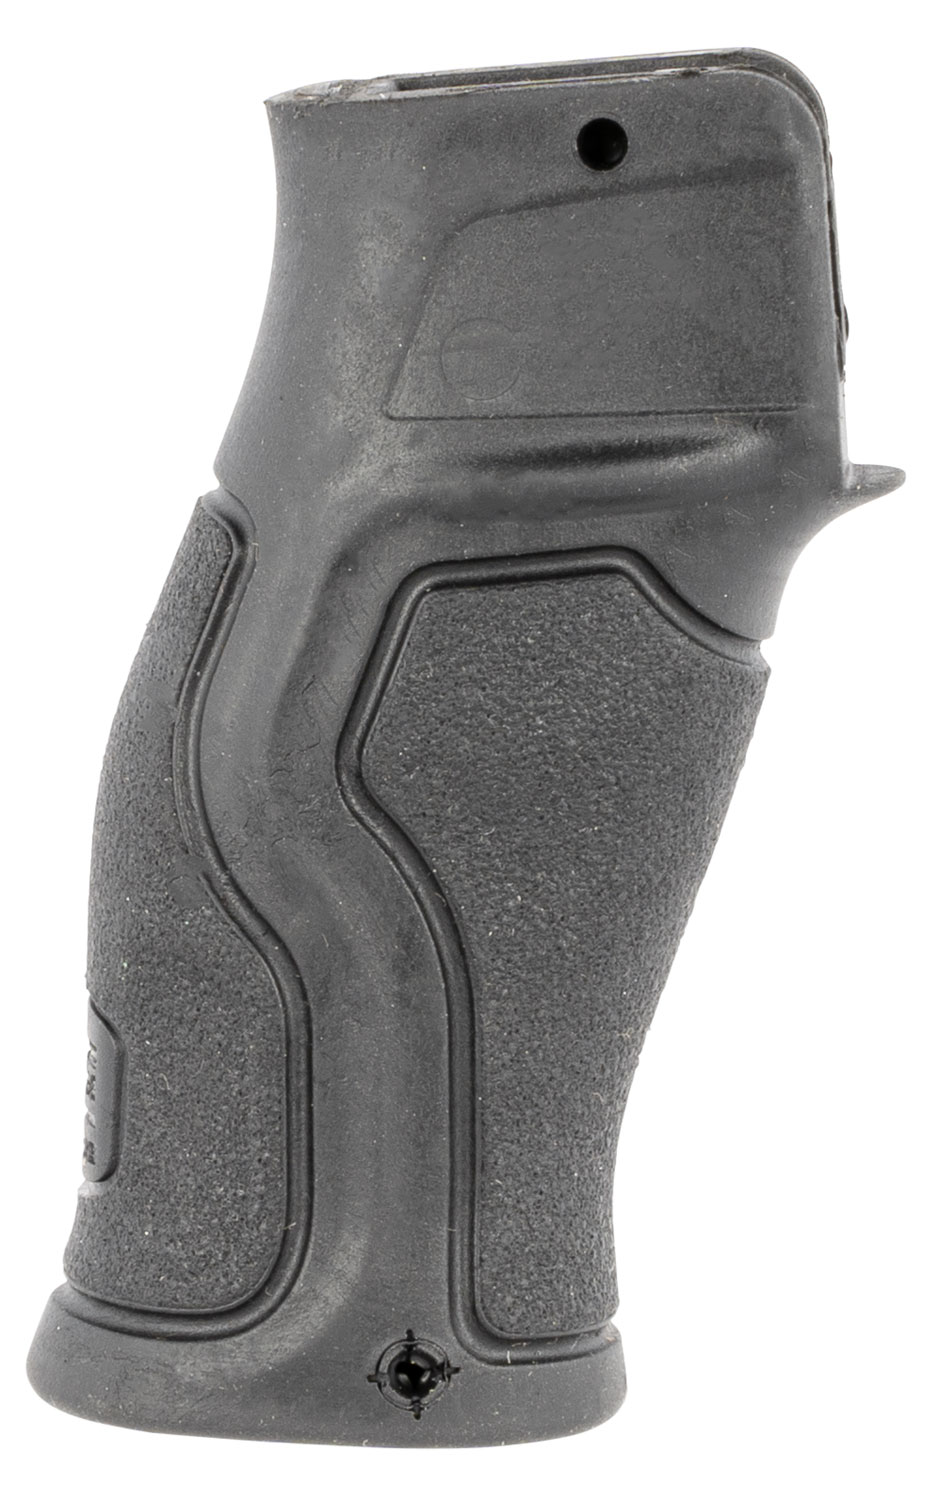 FAB Defense FX-GRADUSFBVB Gradus Ergonomic Pistol Grip Beavertail Black Polymer with Rubber Overmold for AR-15, AR-10, M16, M4